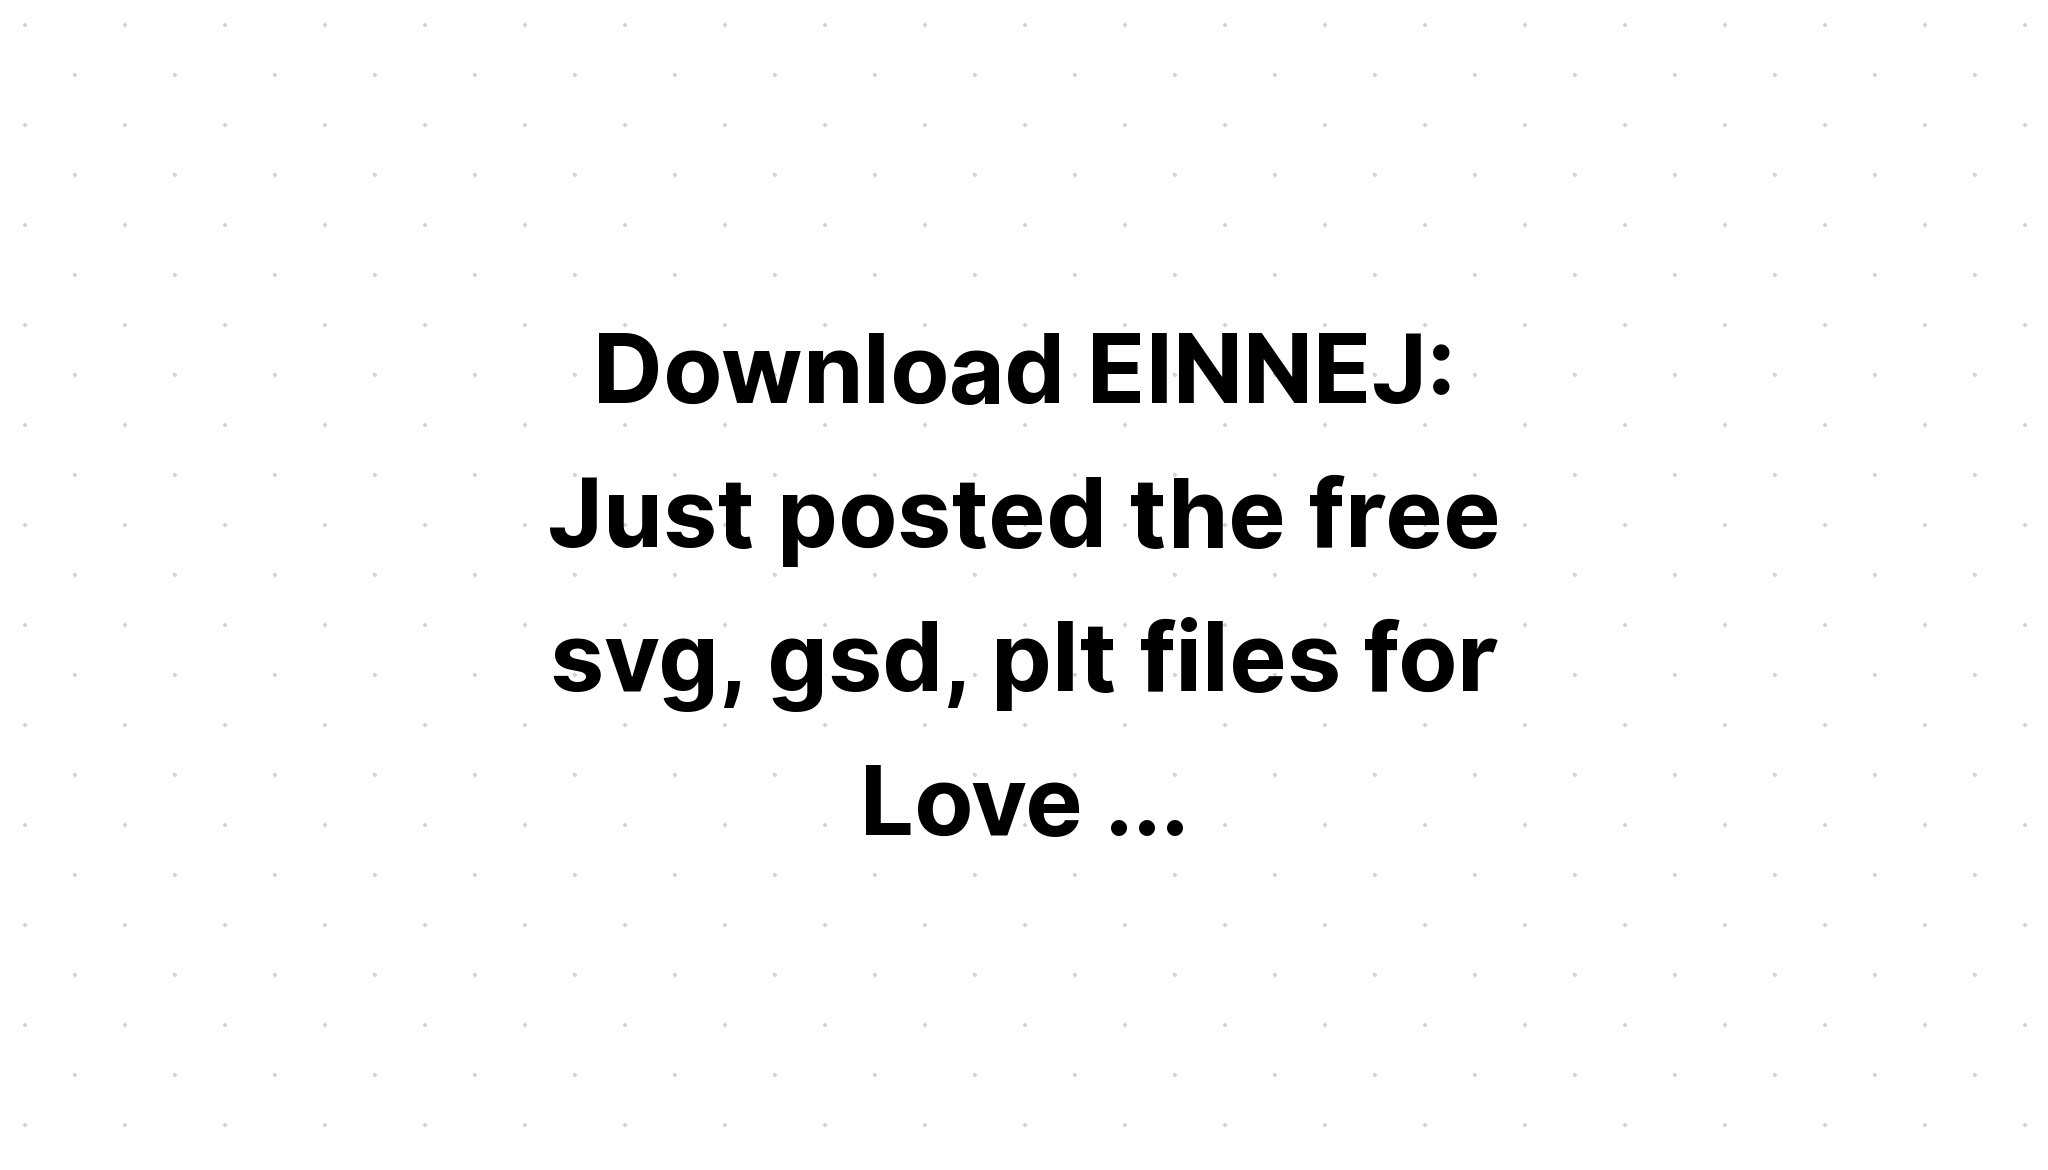 Download Capture The Love Svg File - Layered SVG Cut File